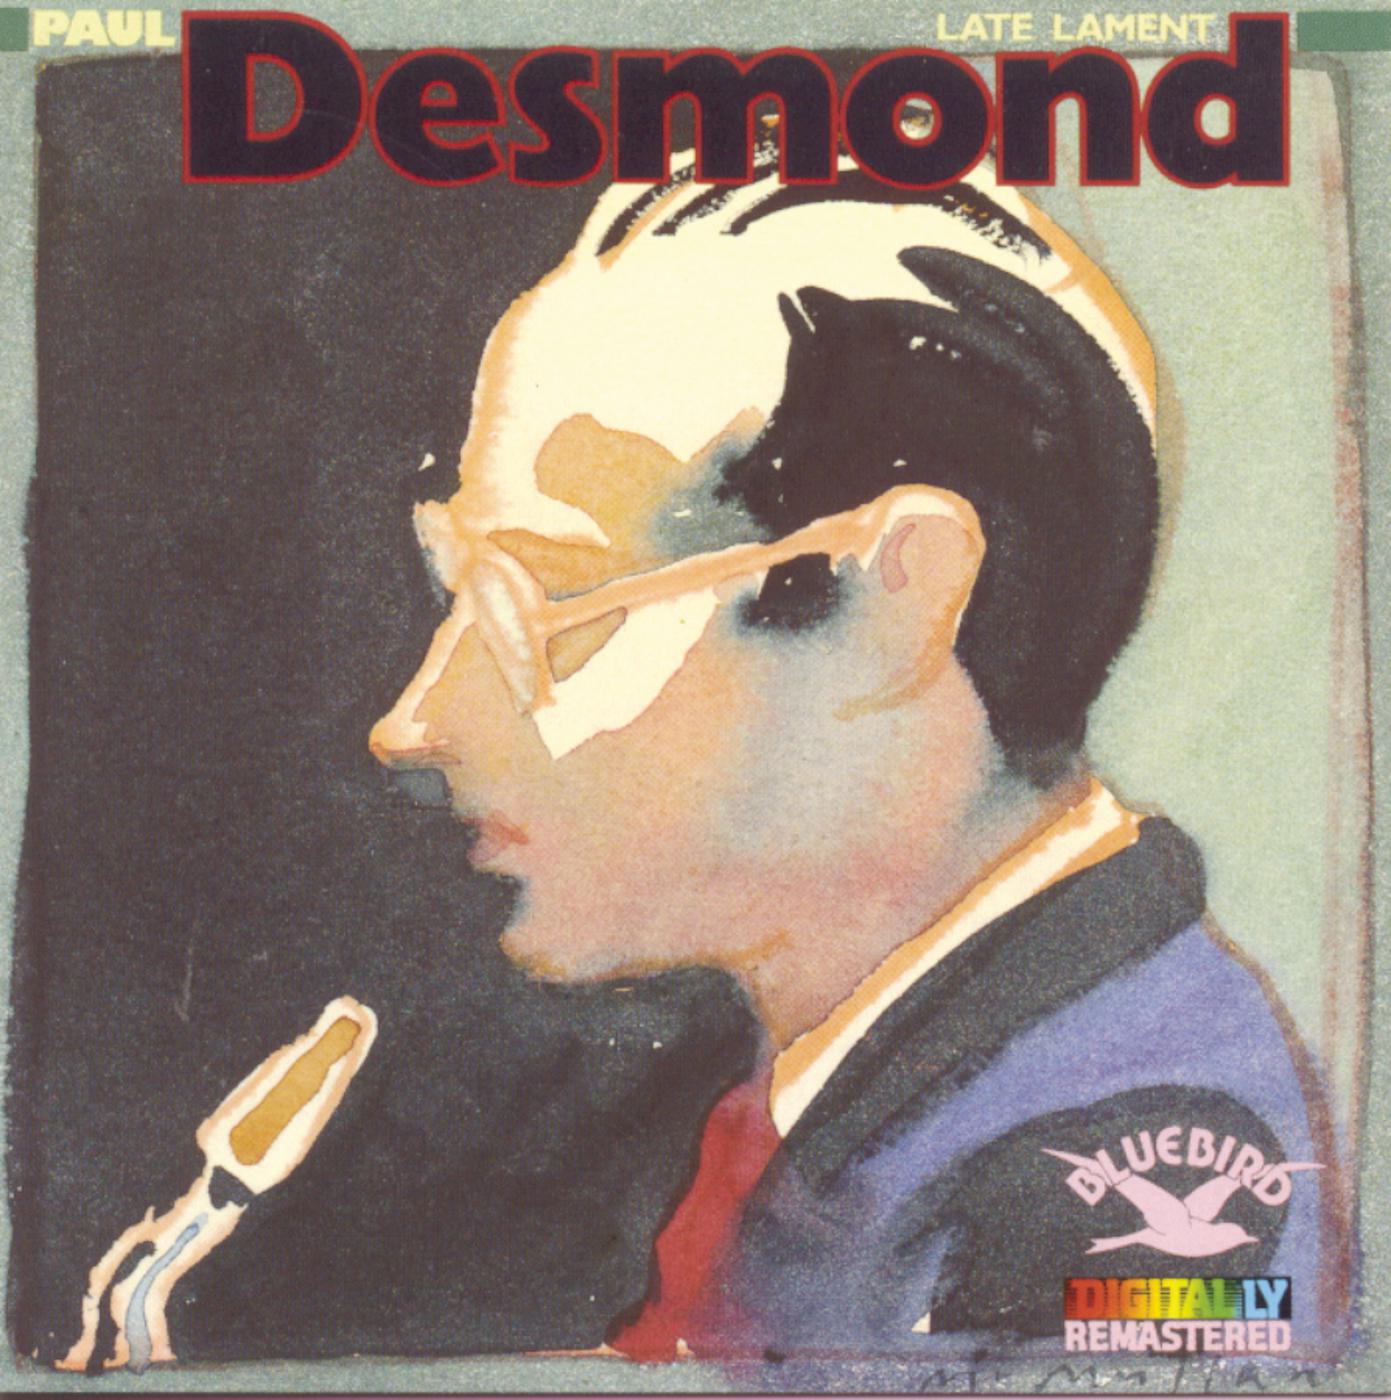 Paul Desmond - Advise and Consent